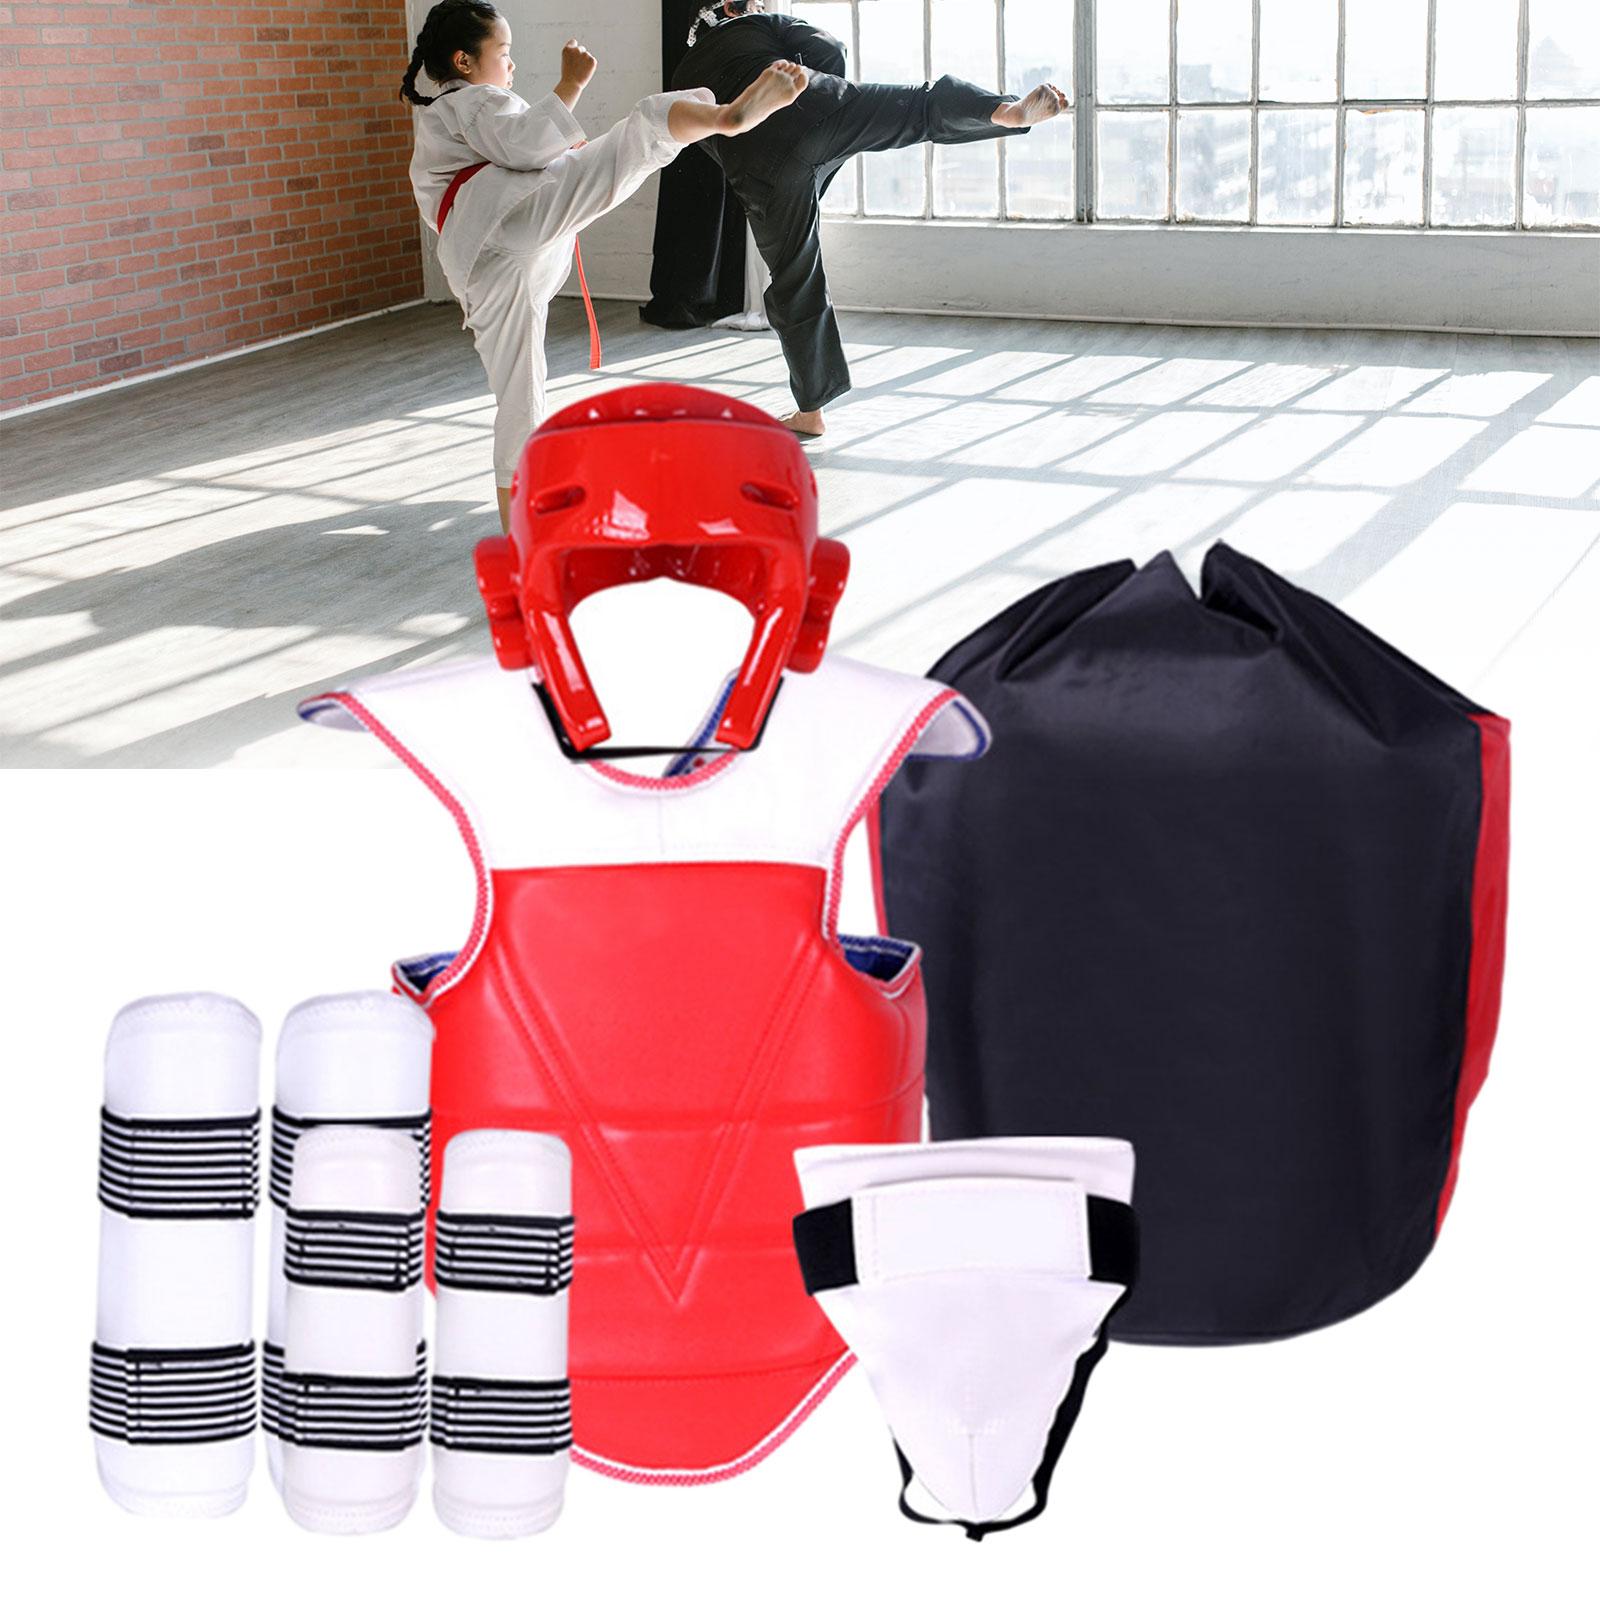 5Pcs Taekwondo Protective Gear for Martial Arts Sparring Training Muay Thai M